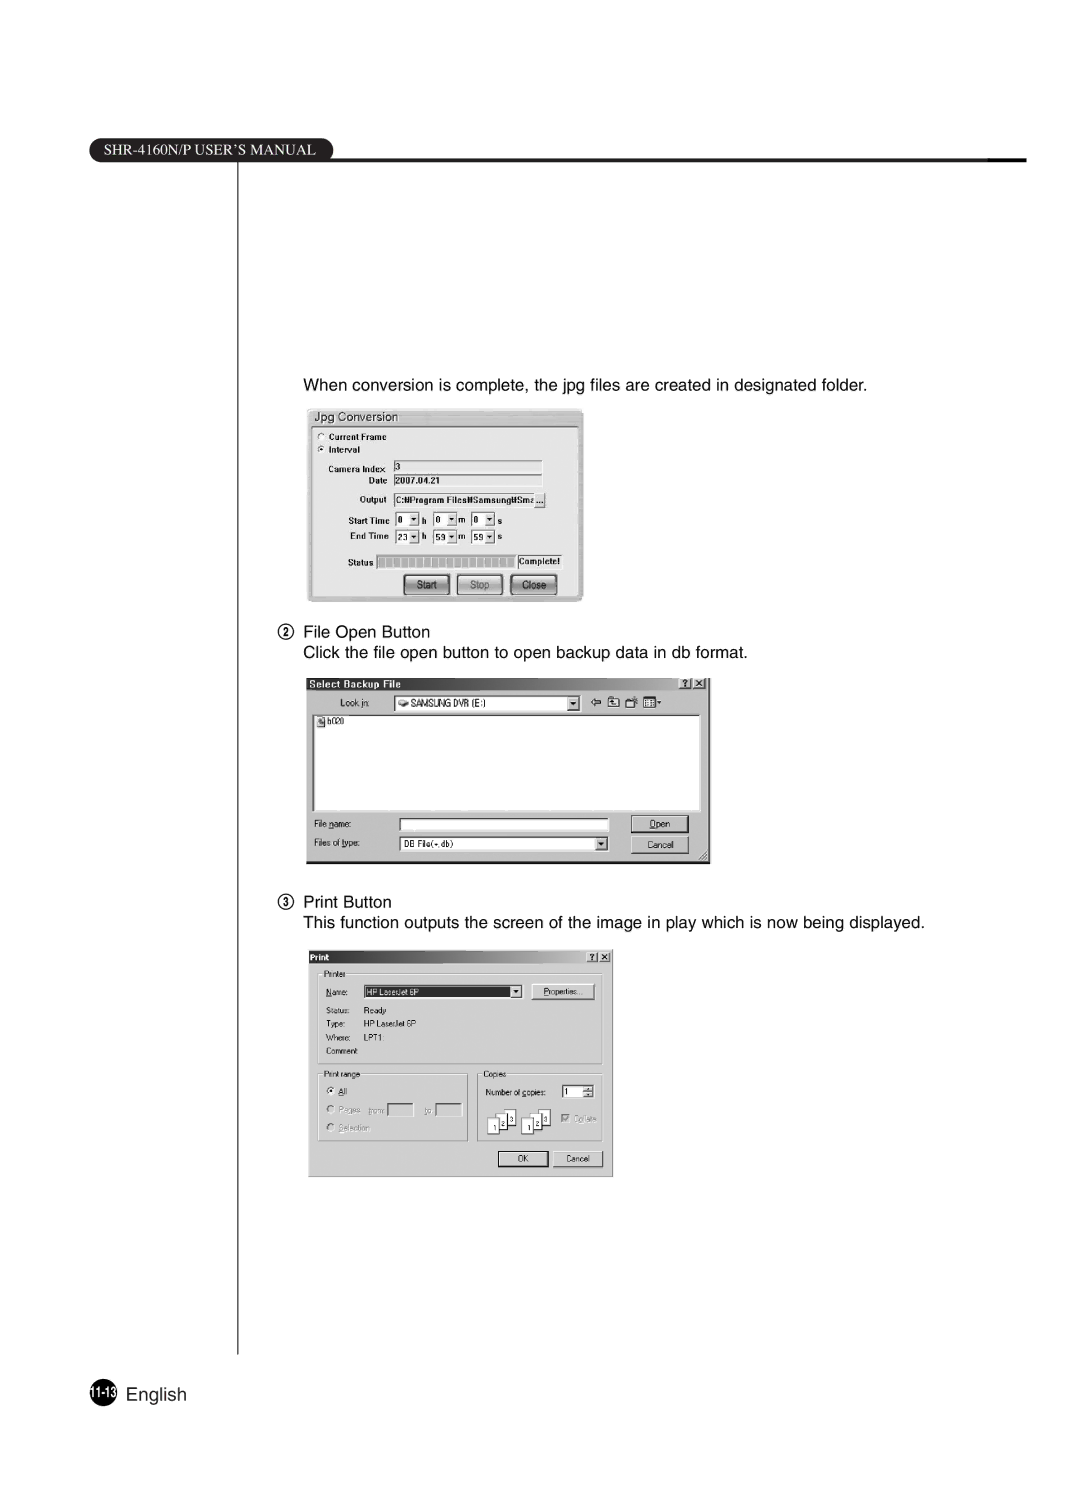 Samsung SHR-4160P manual 11-13English 